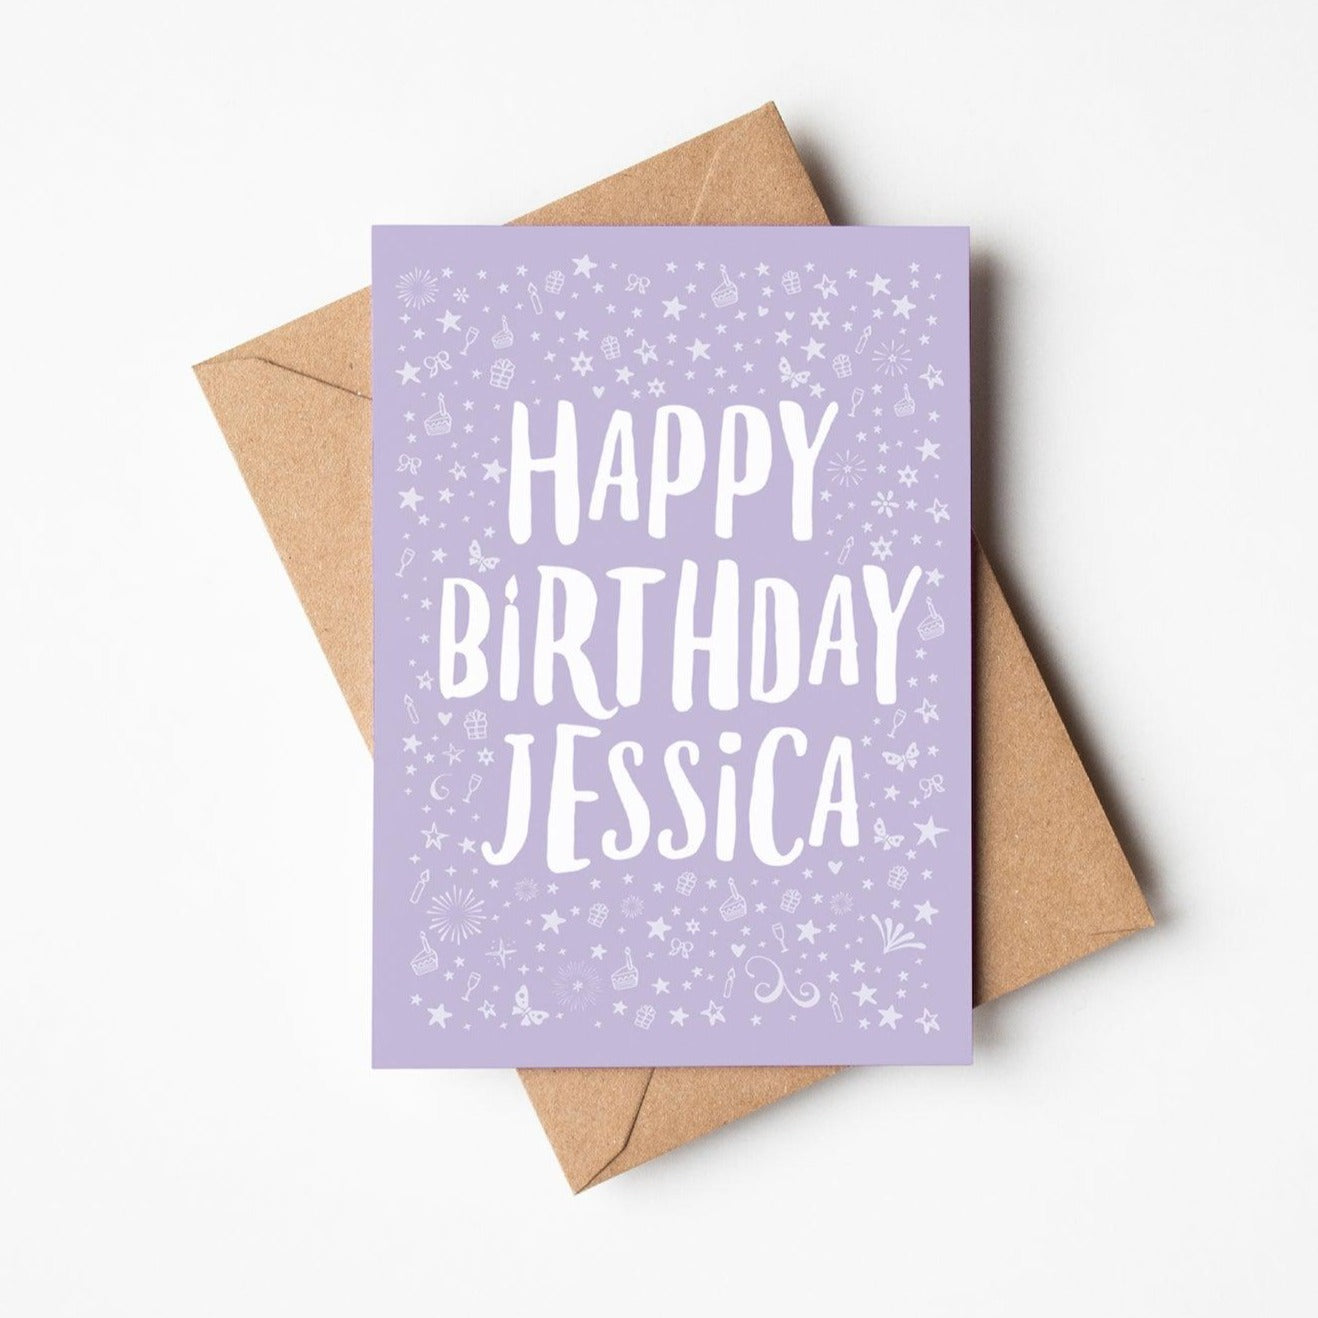 Personalised Happy Birthday Card in purple